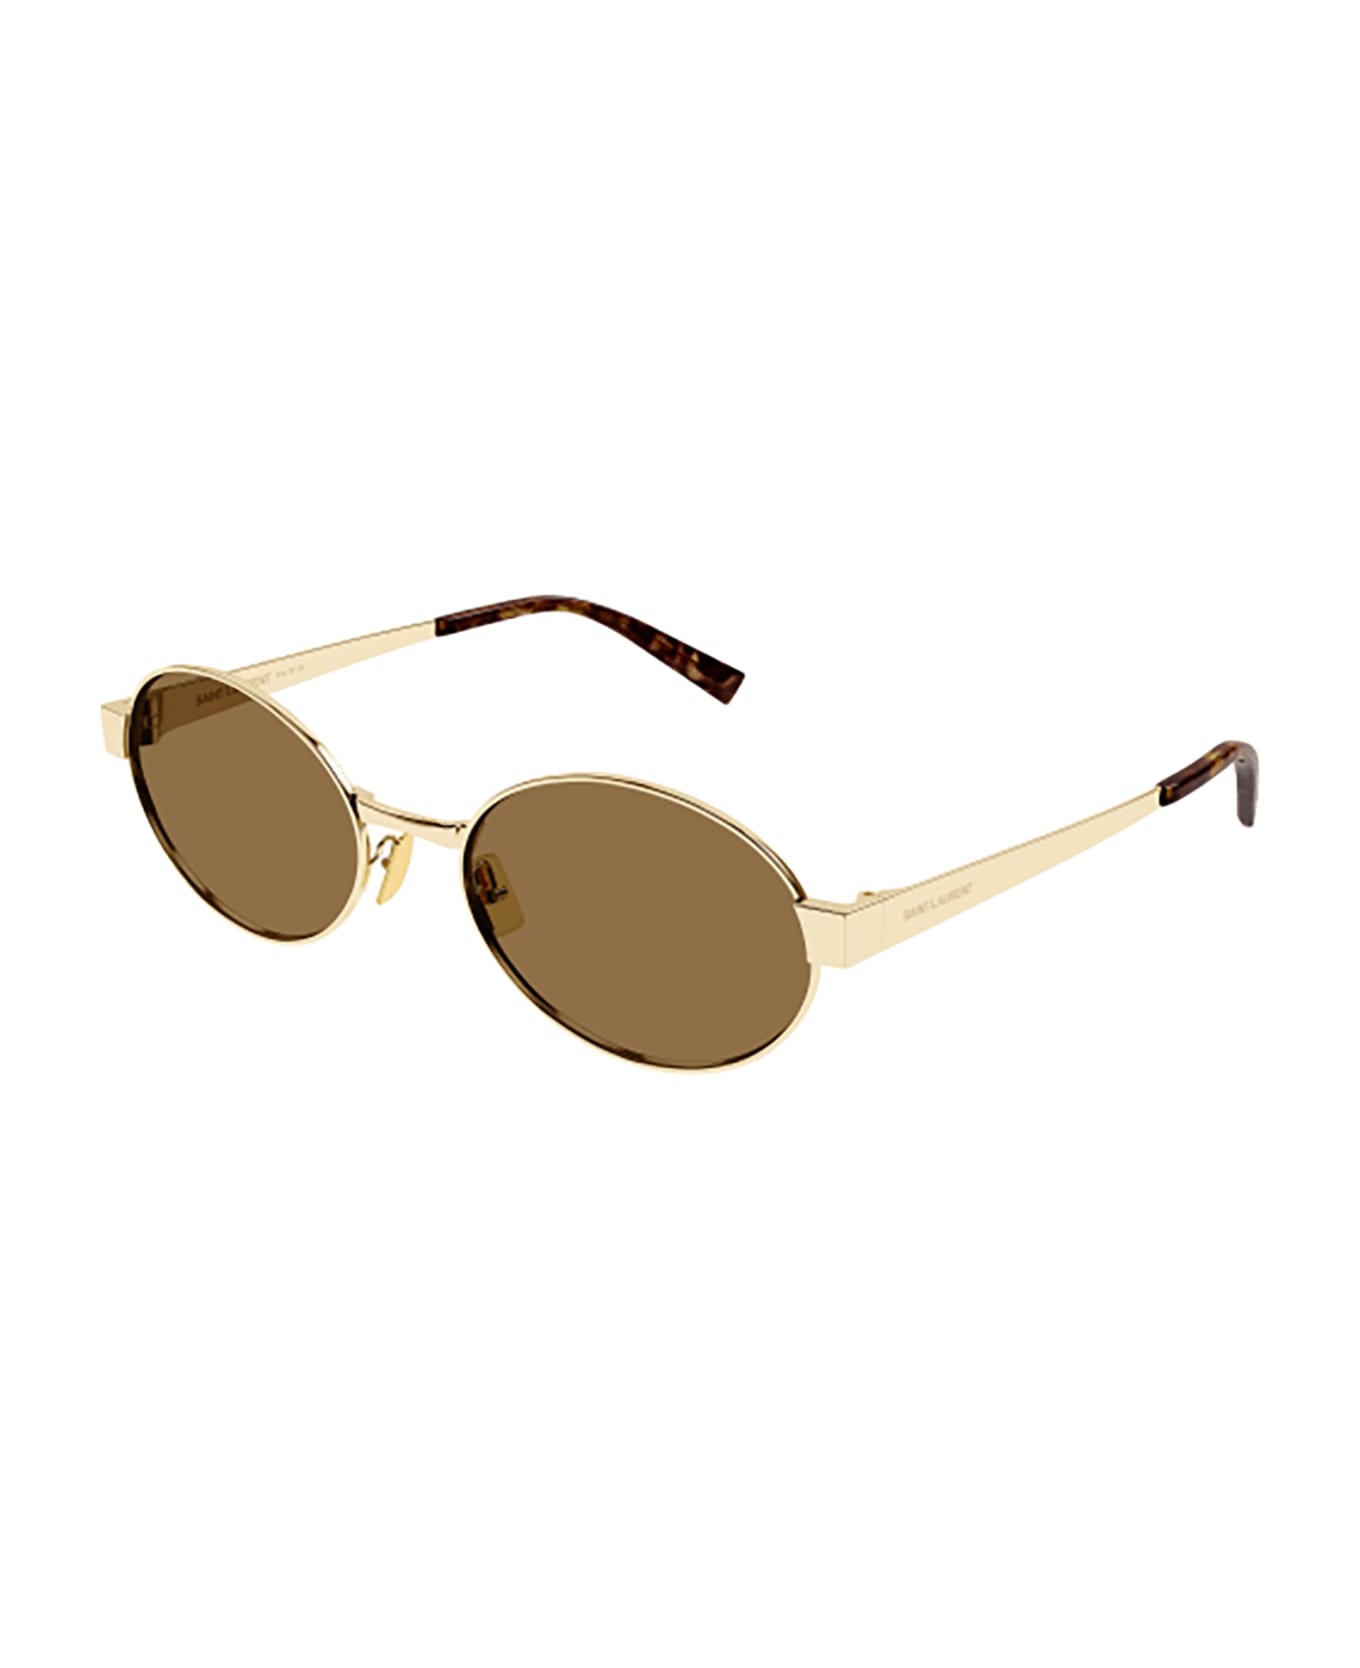 Saint Laurent Eyewear Sl 692 Sunglasses - 004 gold gold brown